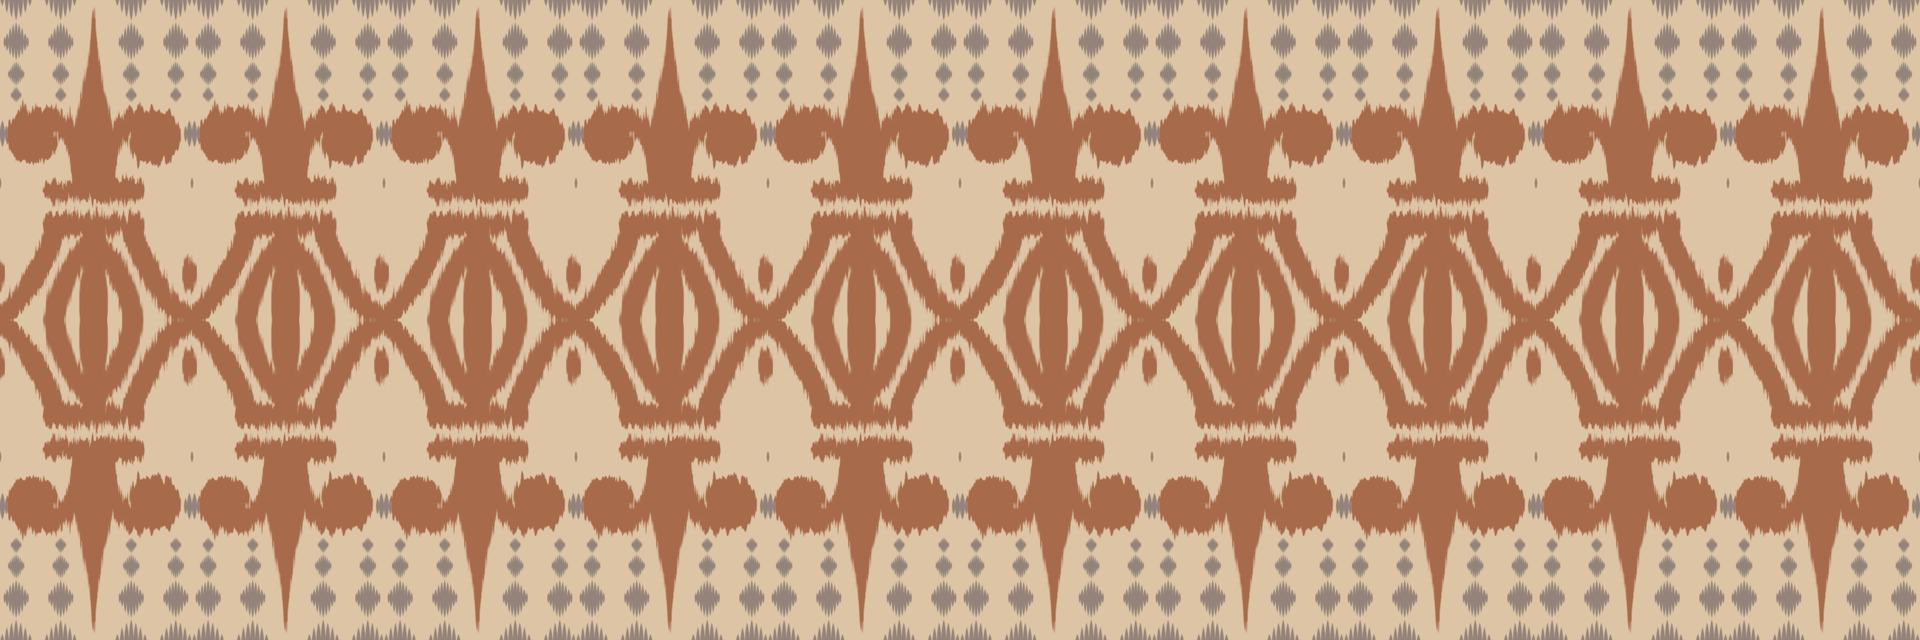 ikat tejido tribal patrón abstracto sin fisuras. étnico geométrico batik ikkat vector digital diseño textil para estampados tela sari mogol cepillo símbolo franjas textura kurti kurtis kurtas